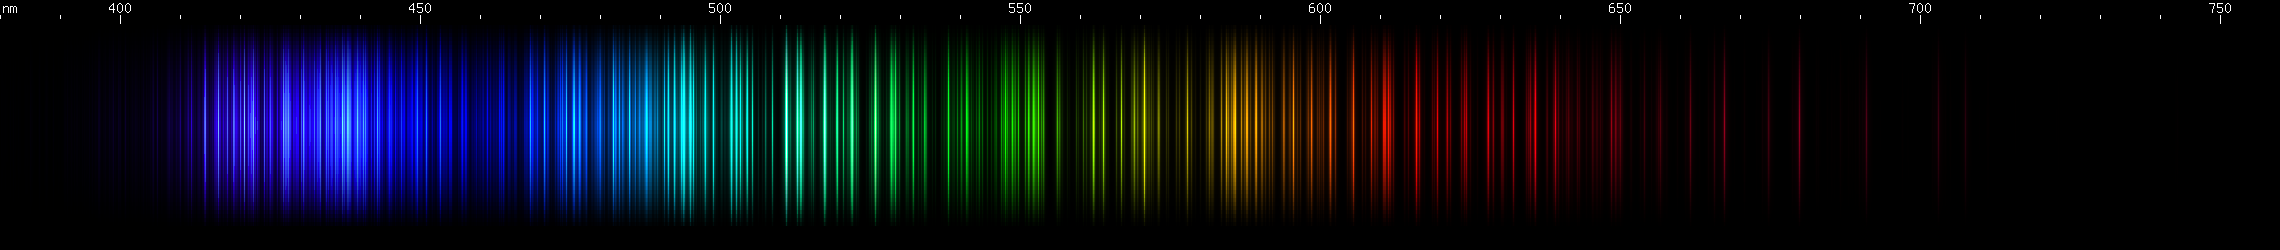 Spectral lines of Praseodymium.